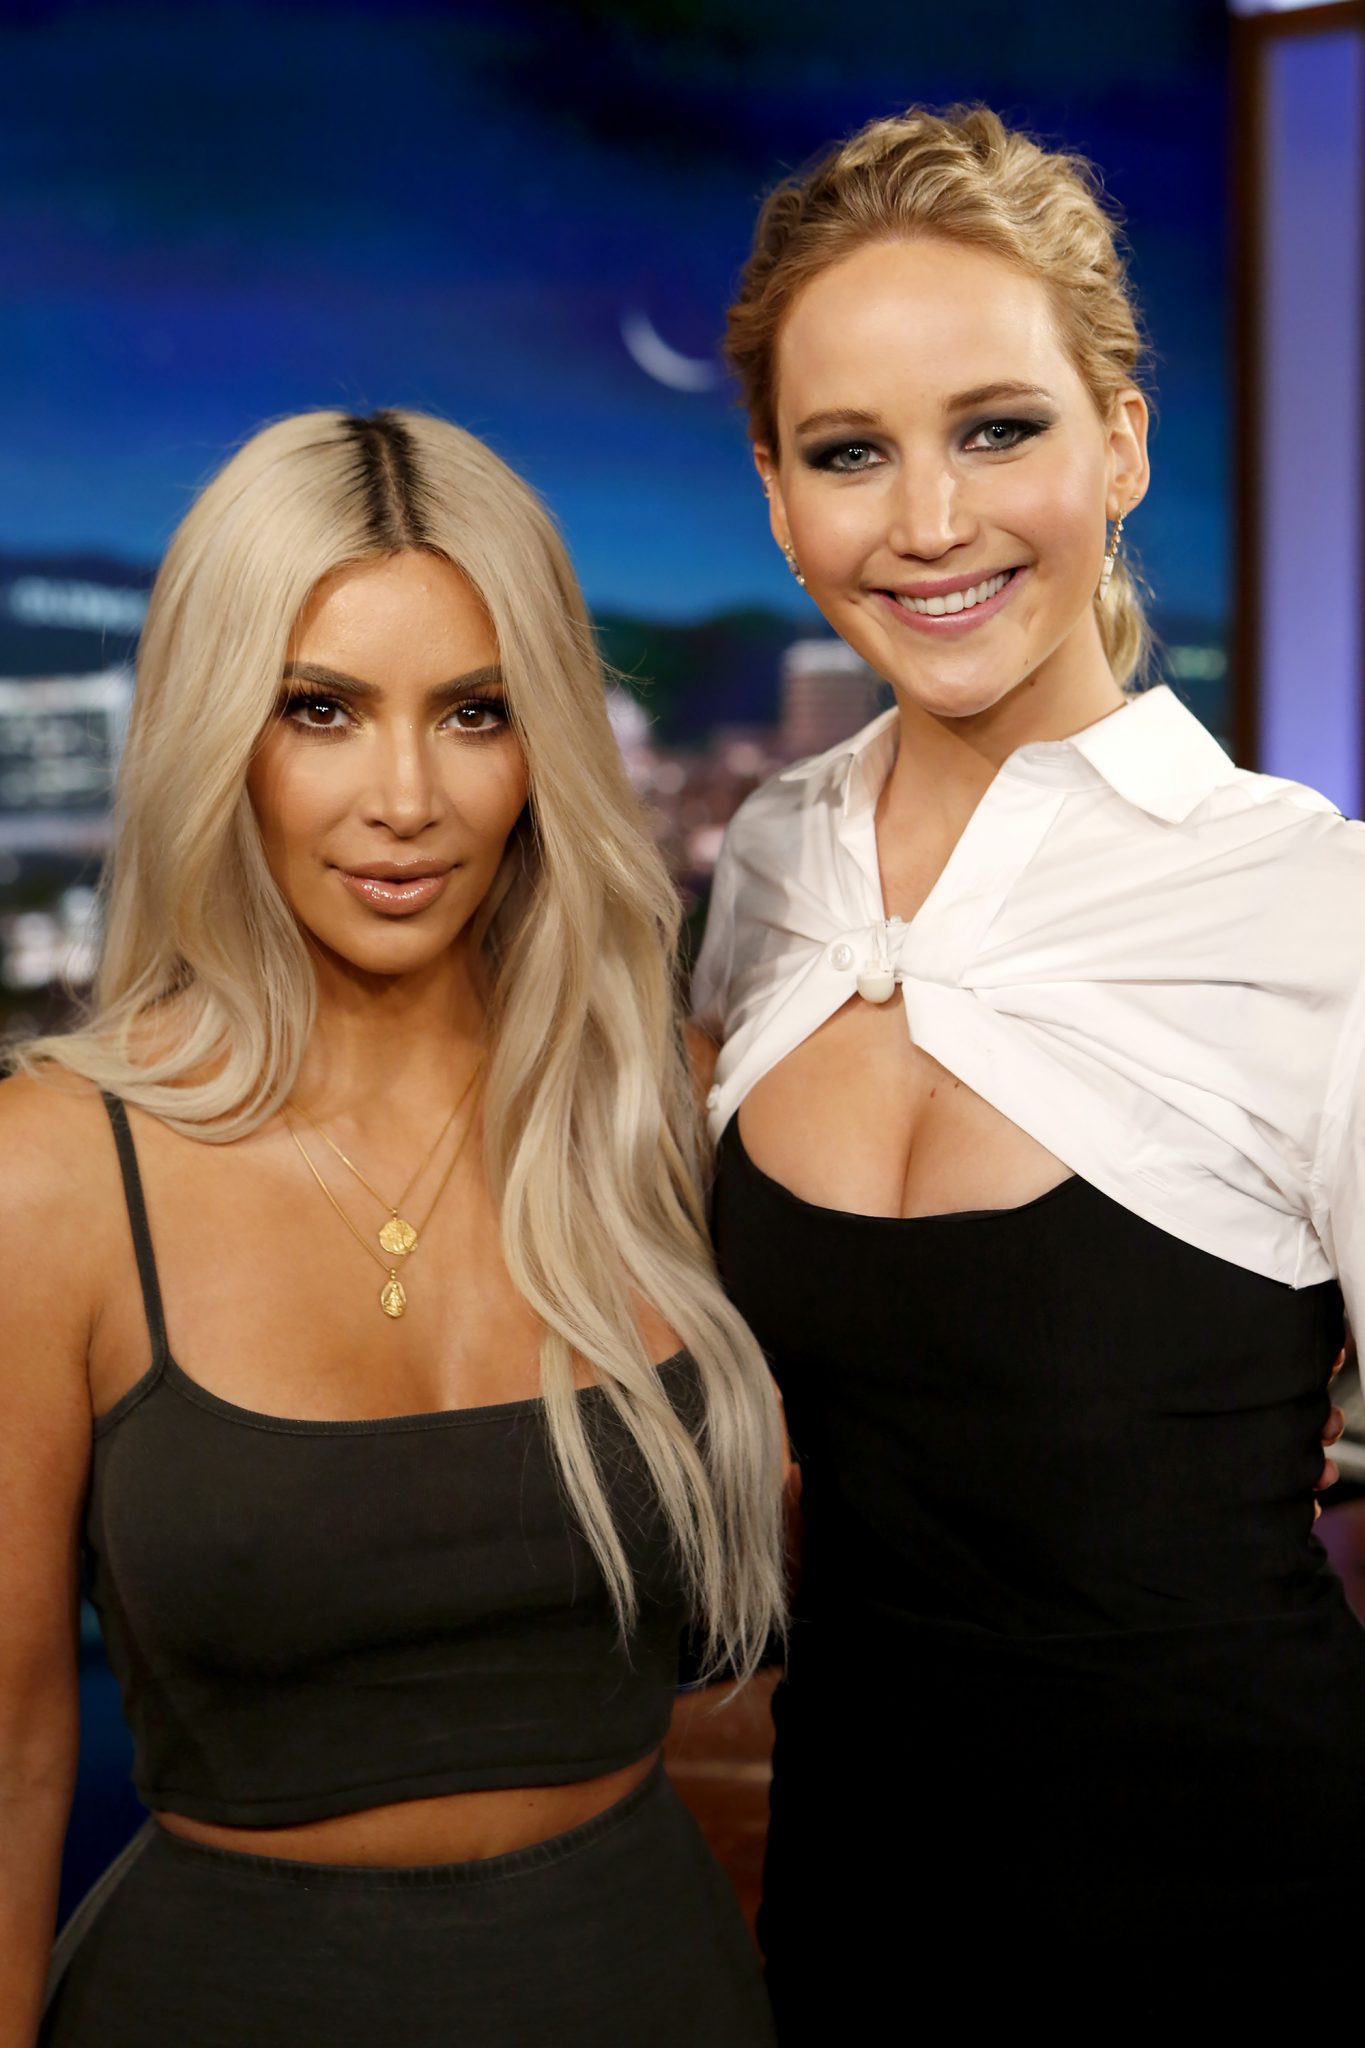 Jennifer Lawrence and Kim Kardashian On Jimmy Kimmel Live